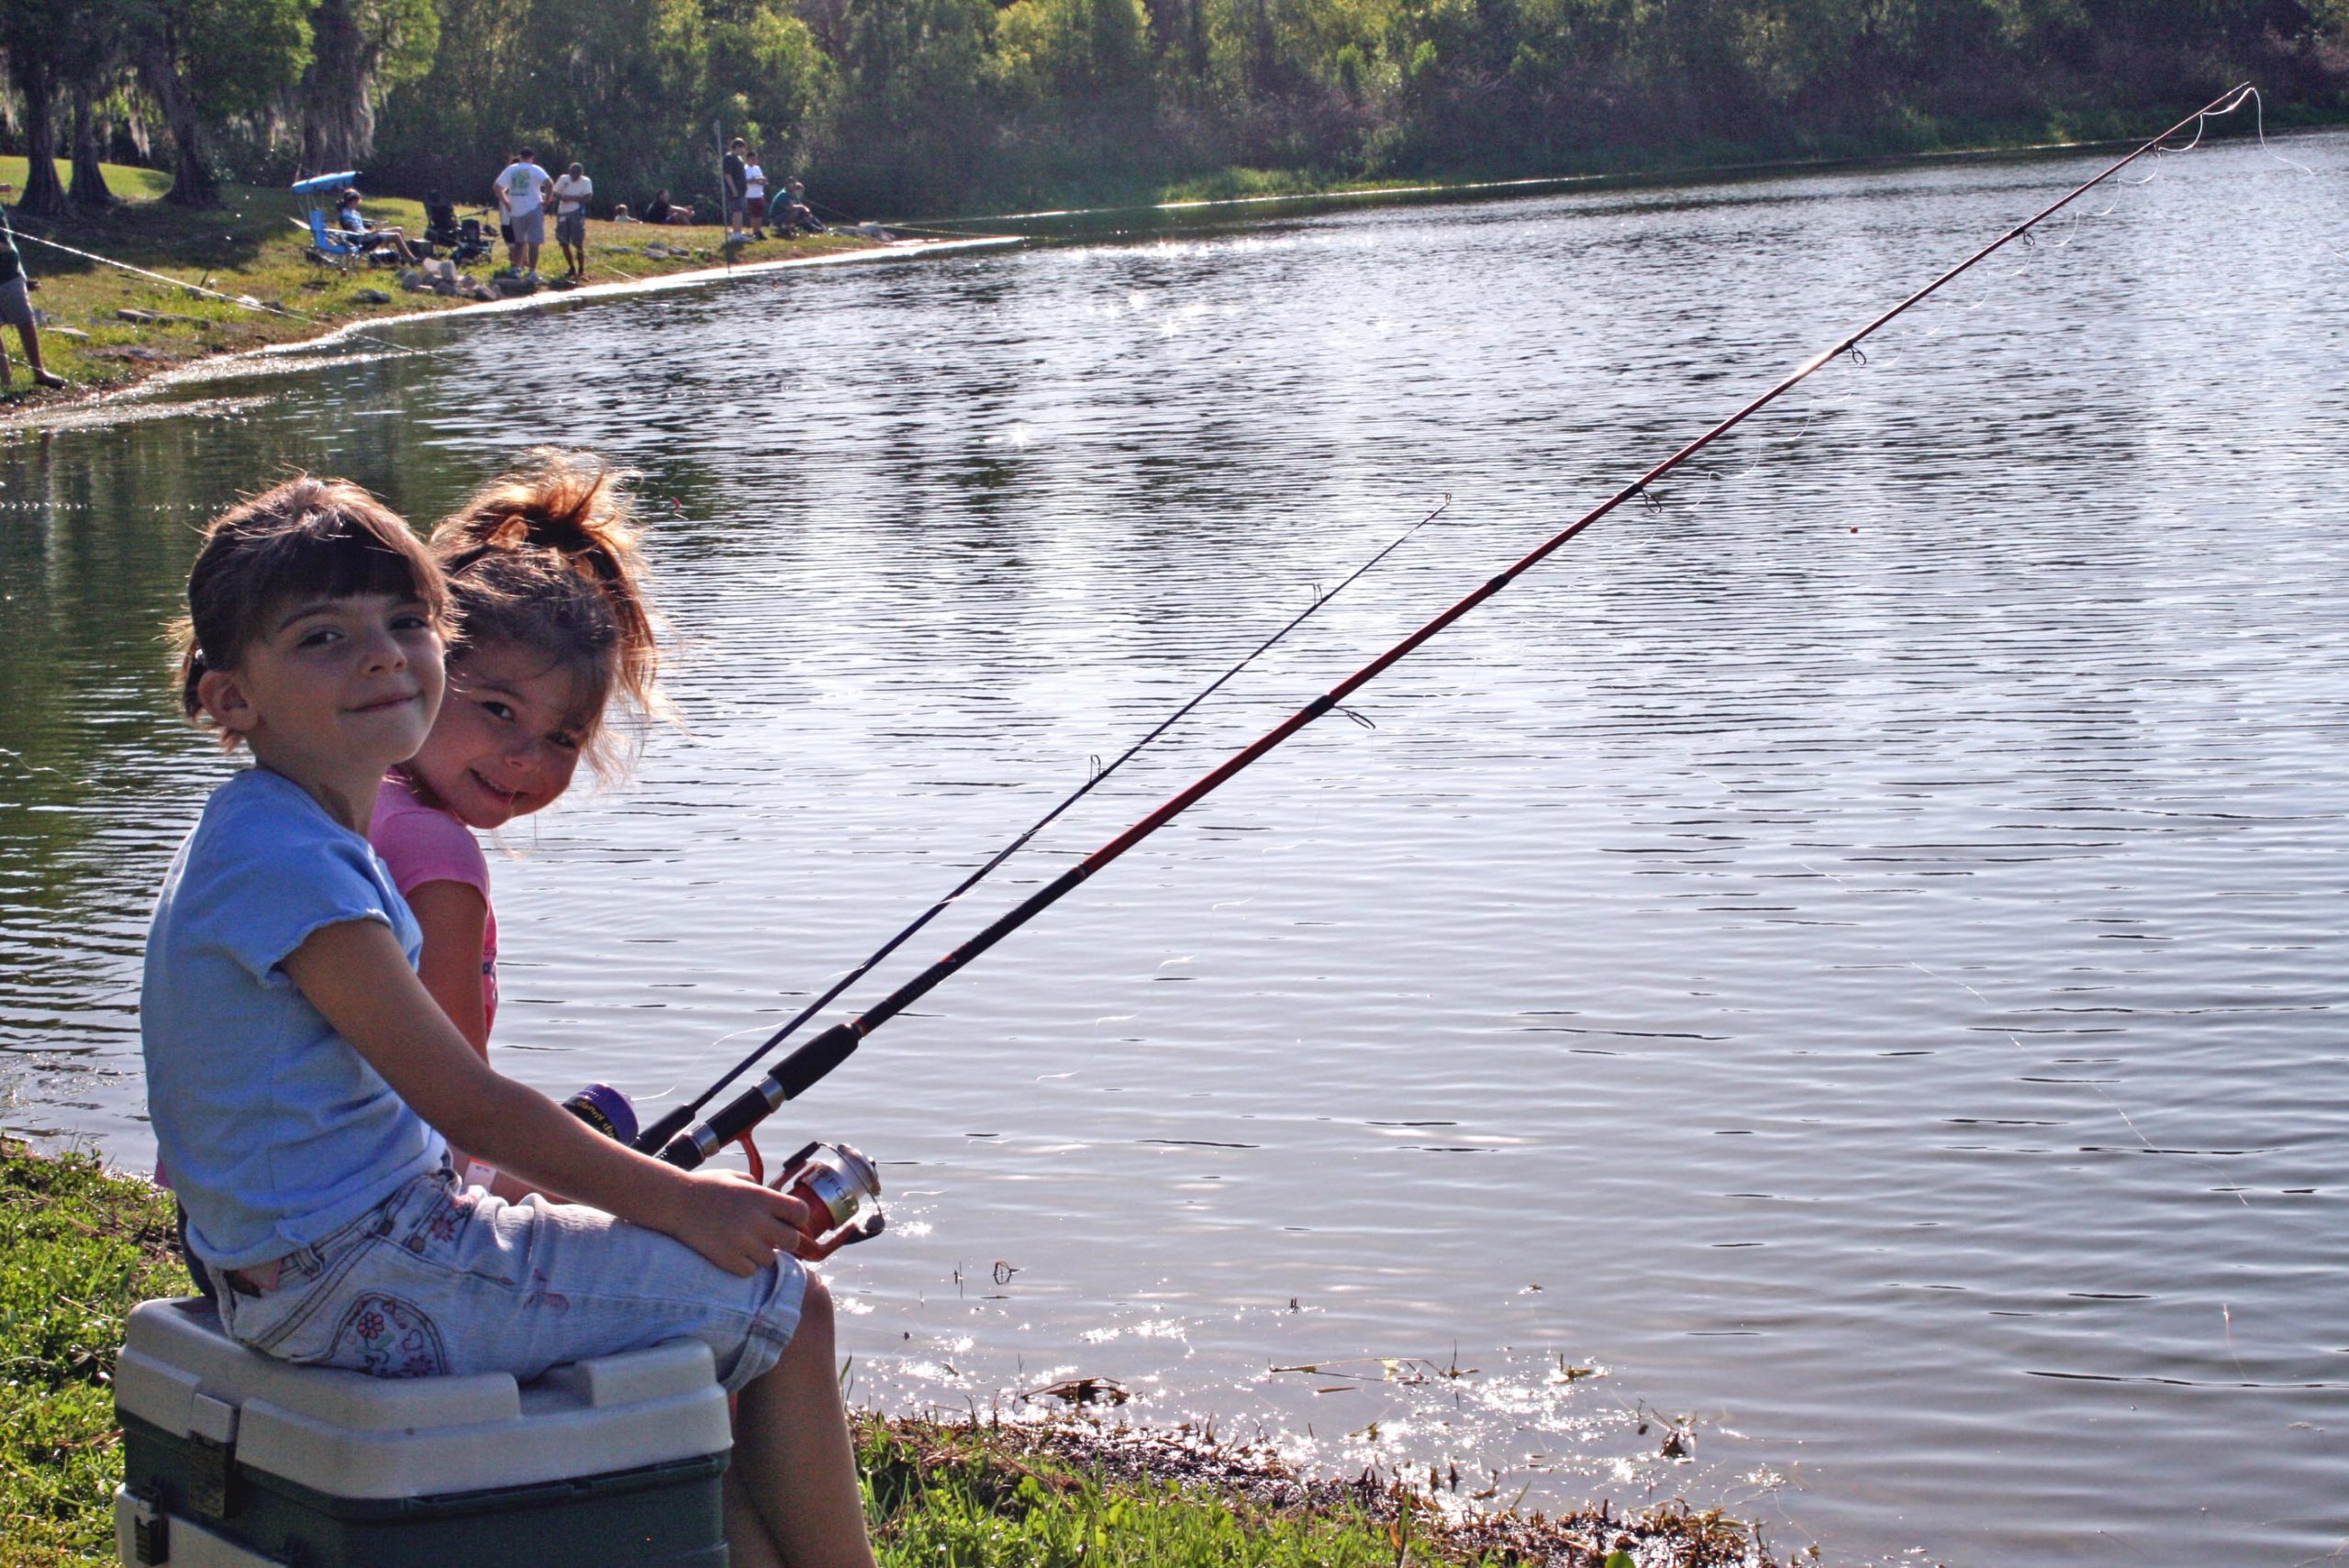 Recreational Fishing and Keep Fish Wet – Fish, Fishing, and